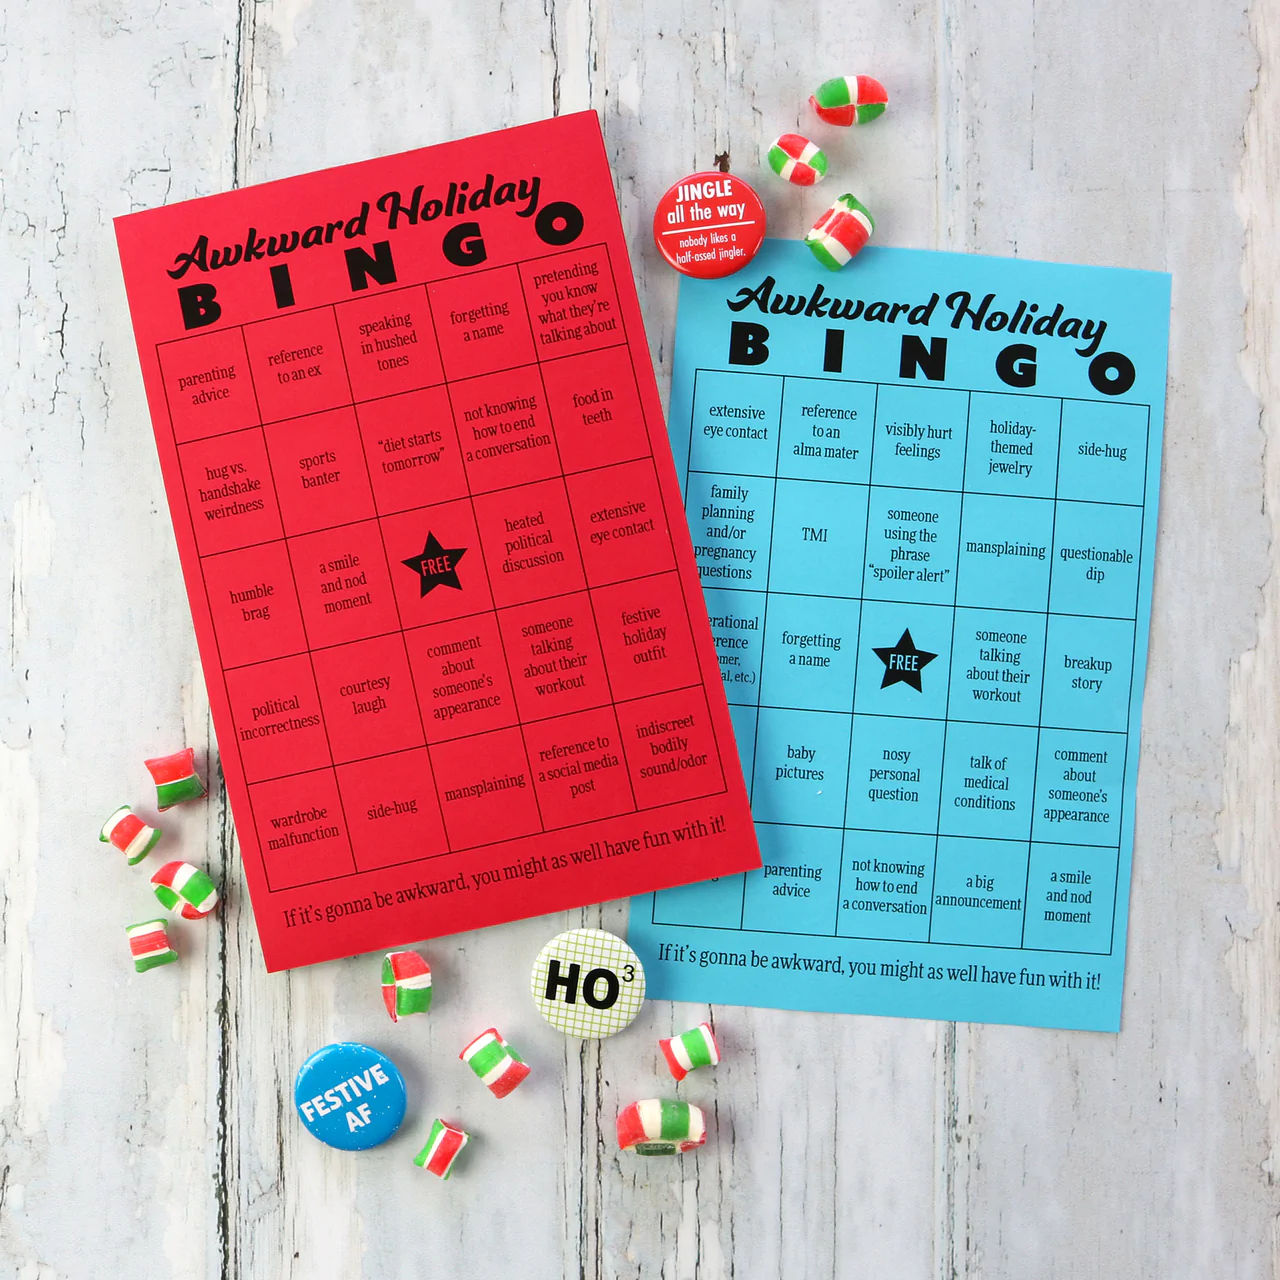 How to Play Holiday Bingo